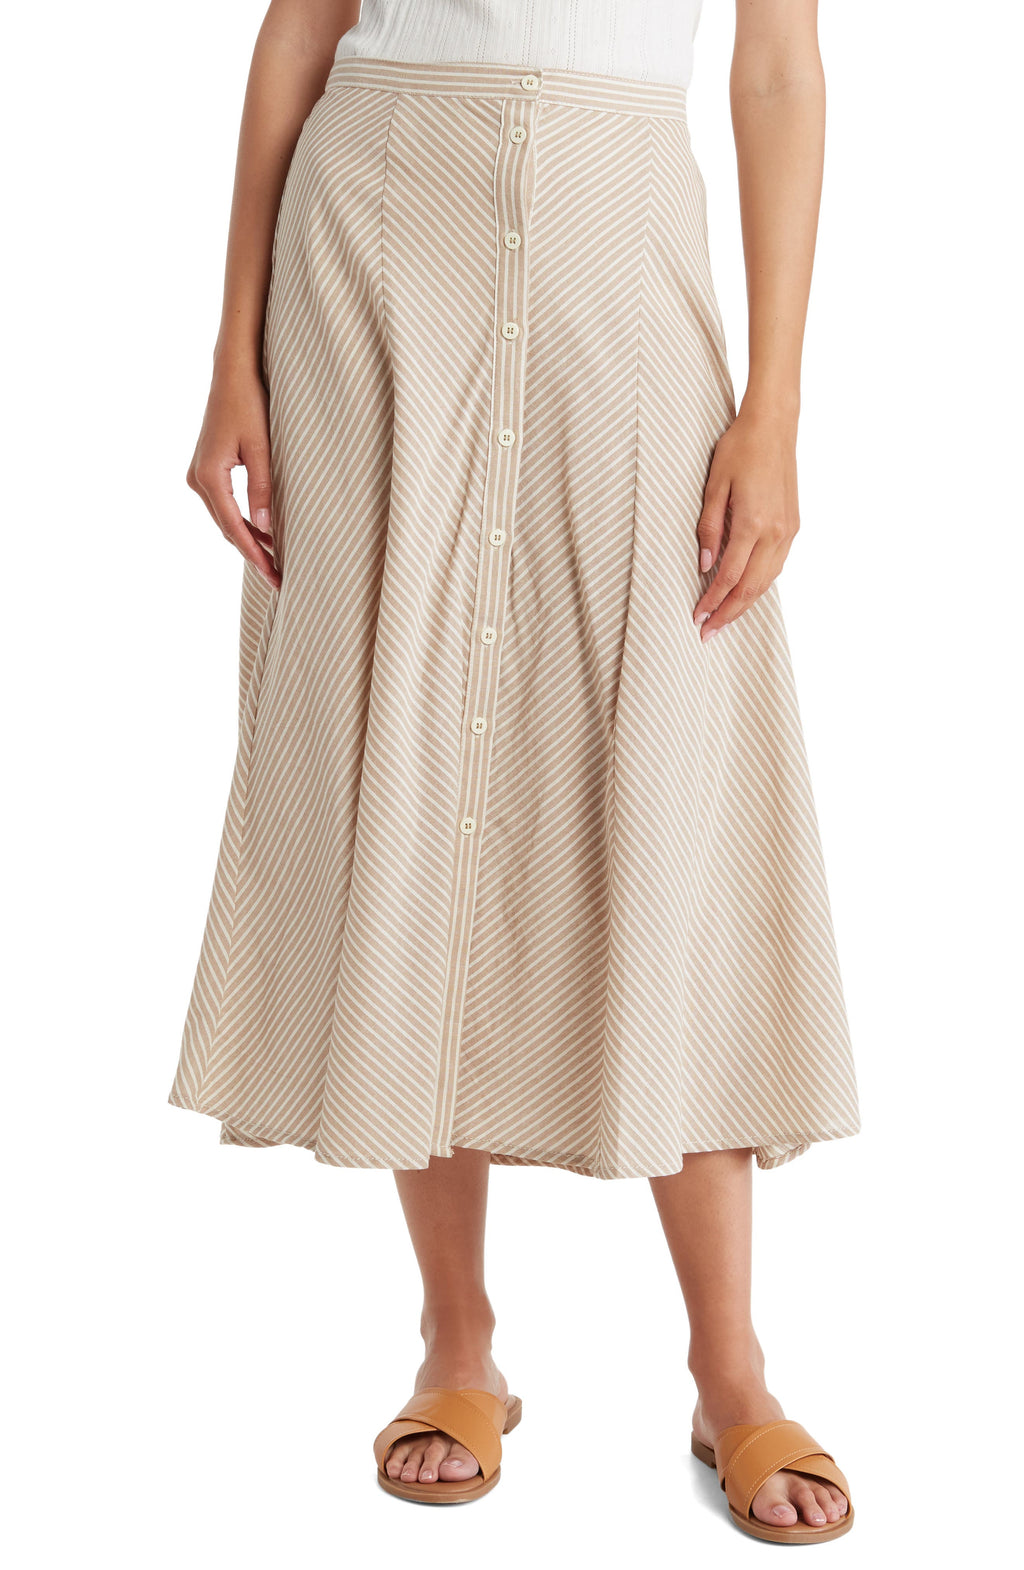 MAX STUDIO Stripe Button Front Cotton Skirt, Main, color, KHAKI/ WHITE STRIPE